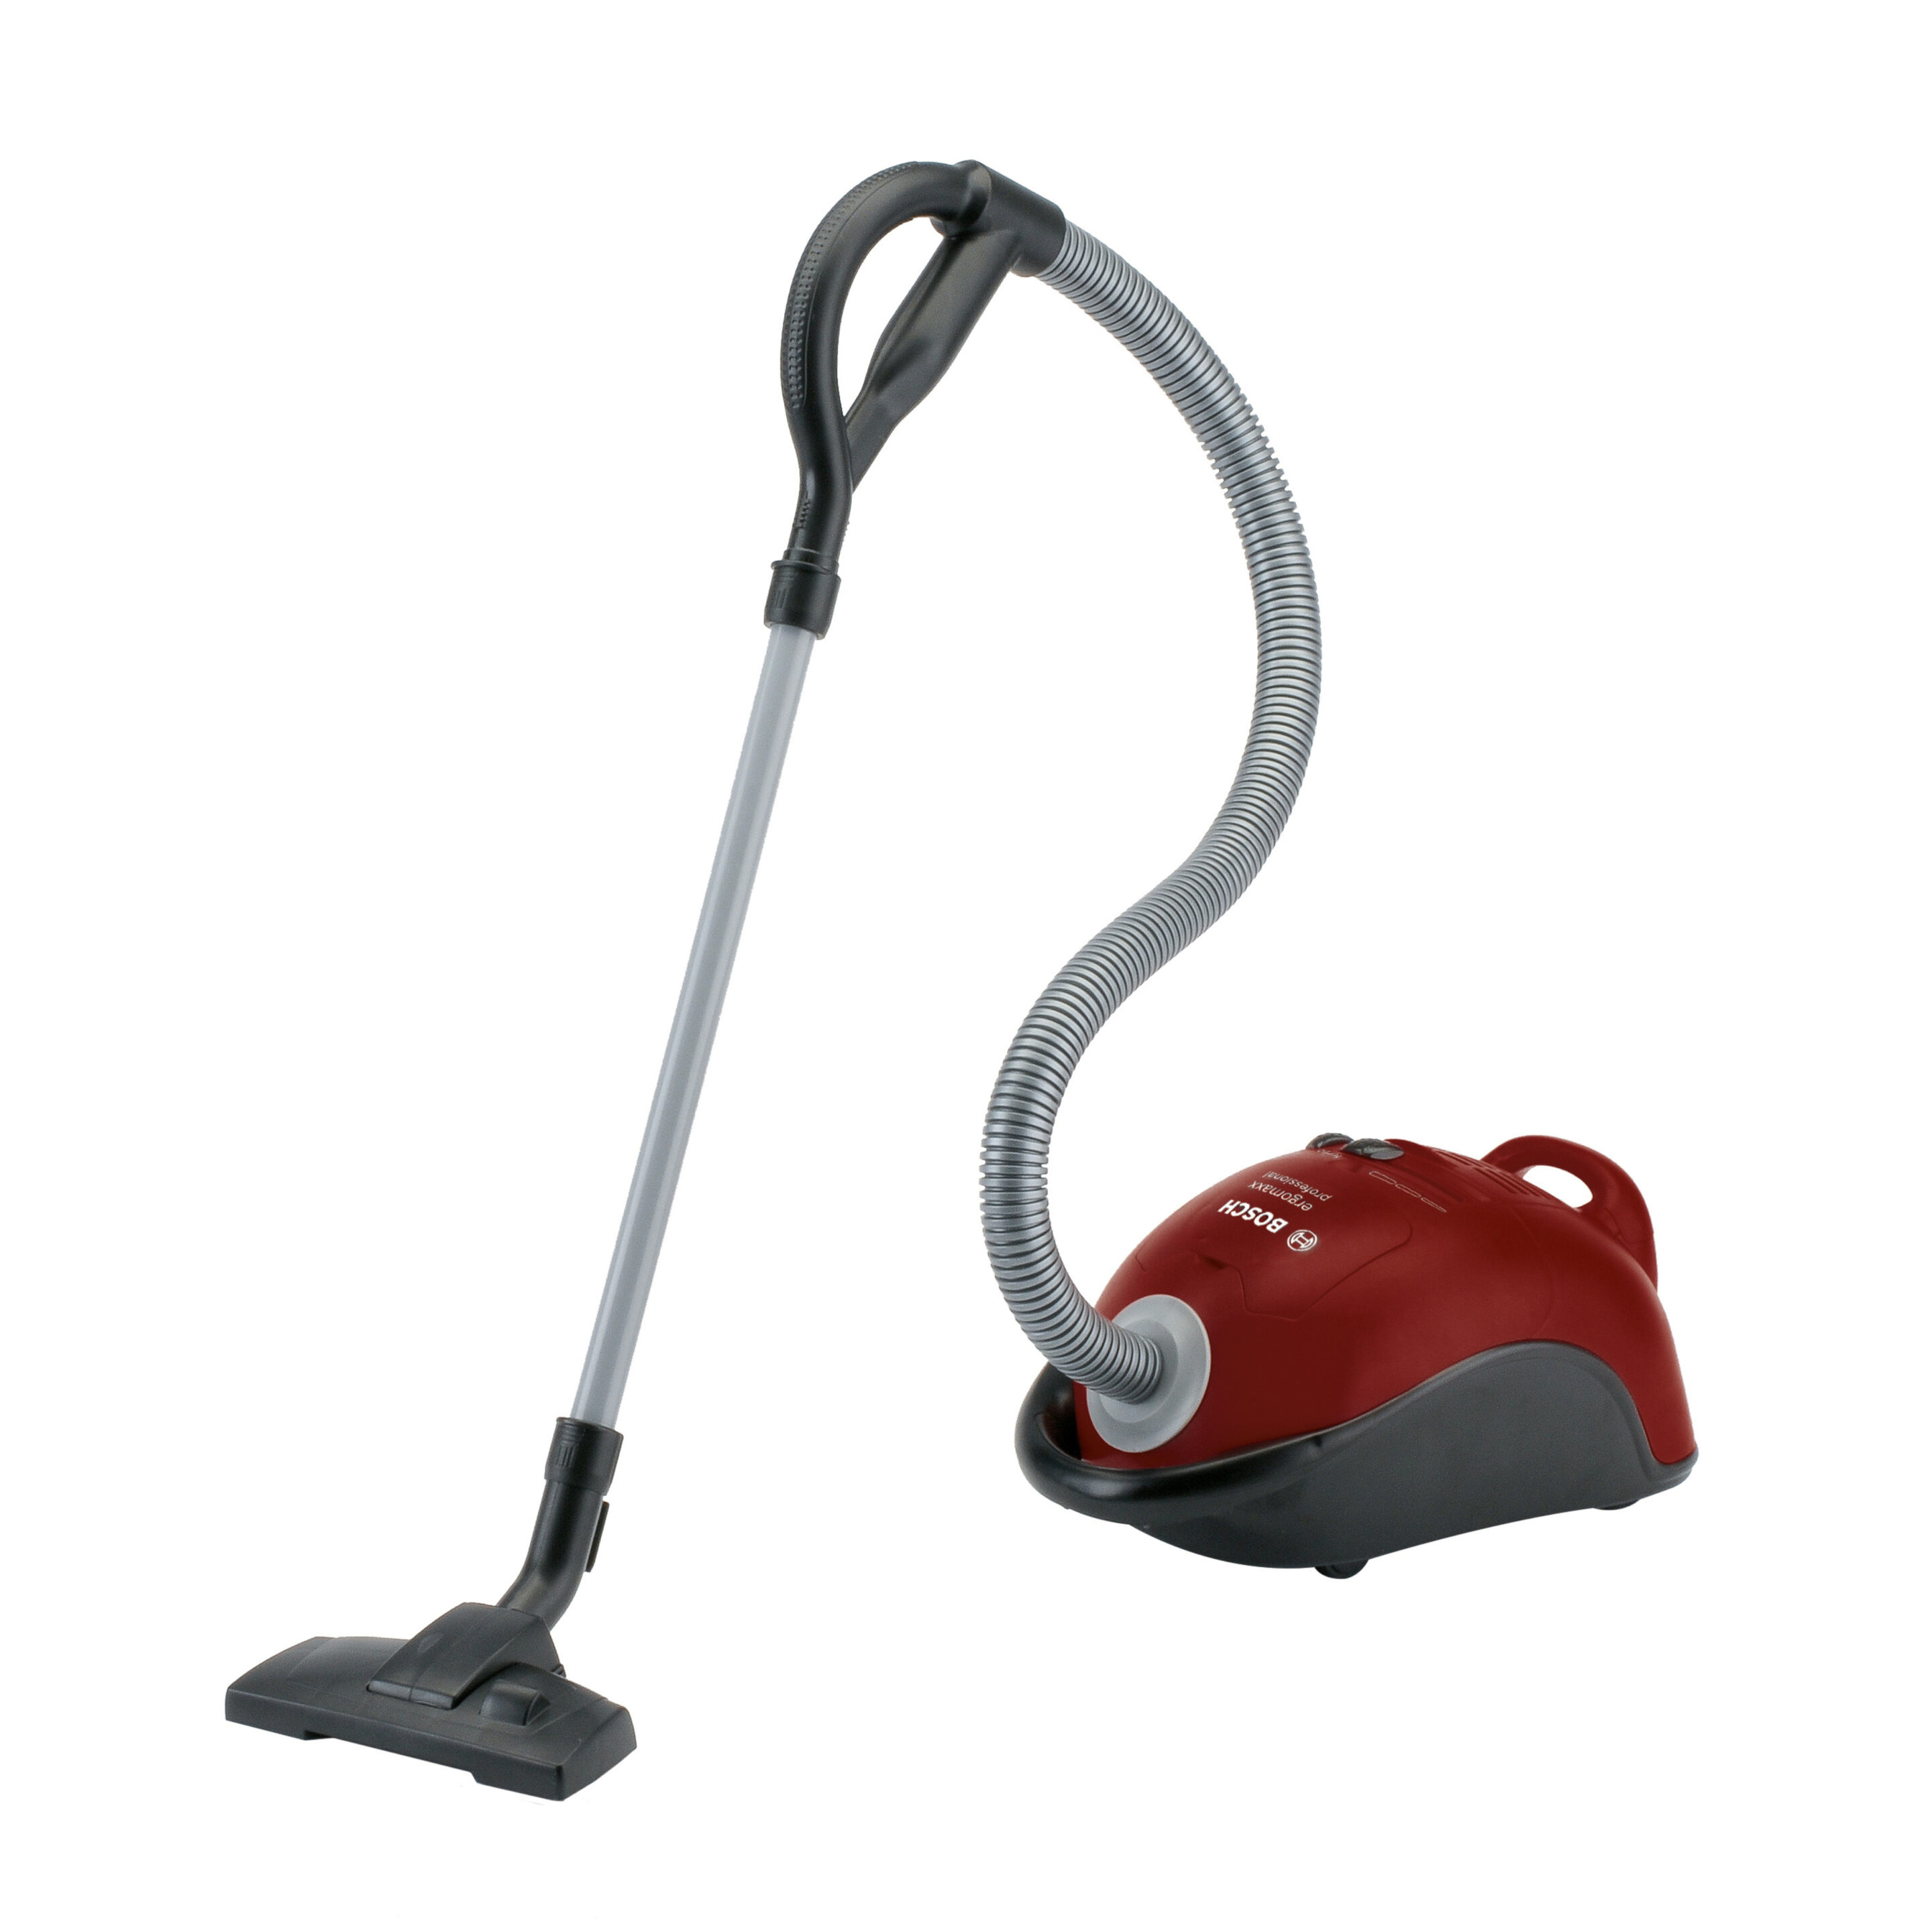 Bosch - Vacuum Cleaner, red